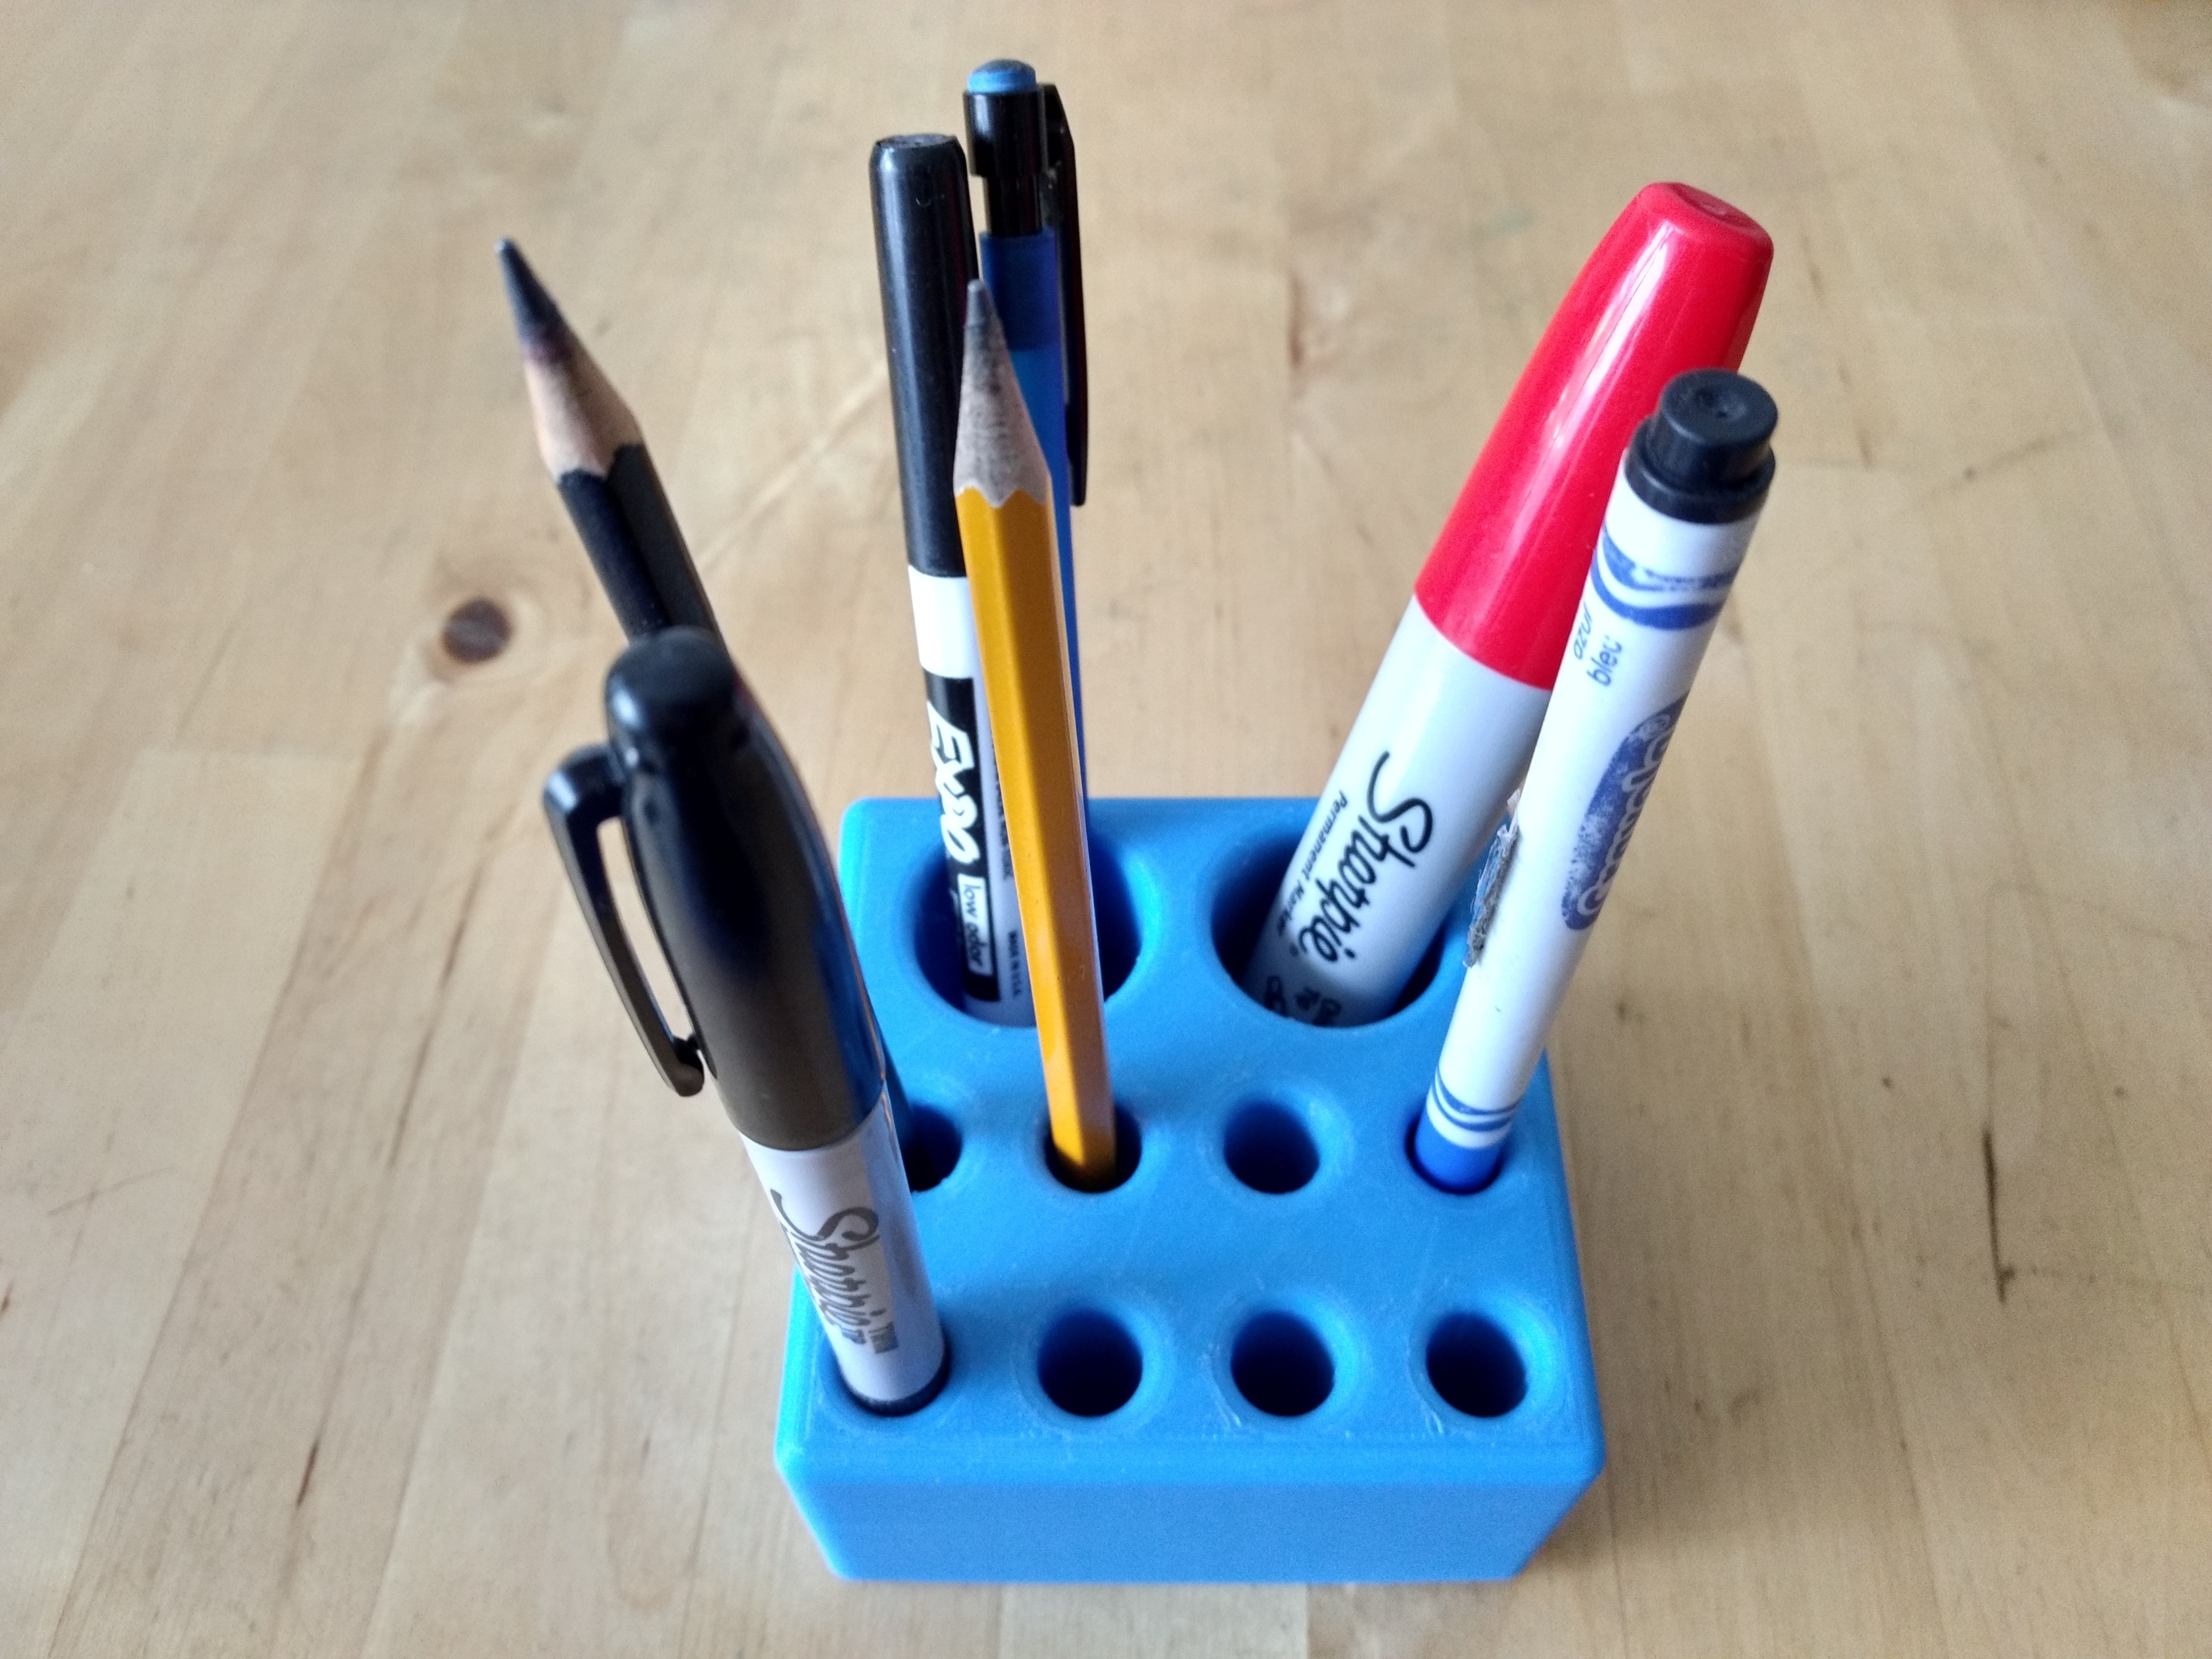 pen/pencil holder - 3.5" x 3.5" x 2" simple bloc...